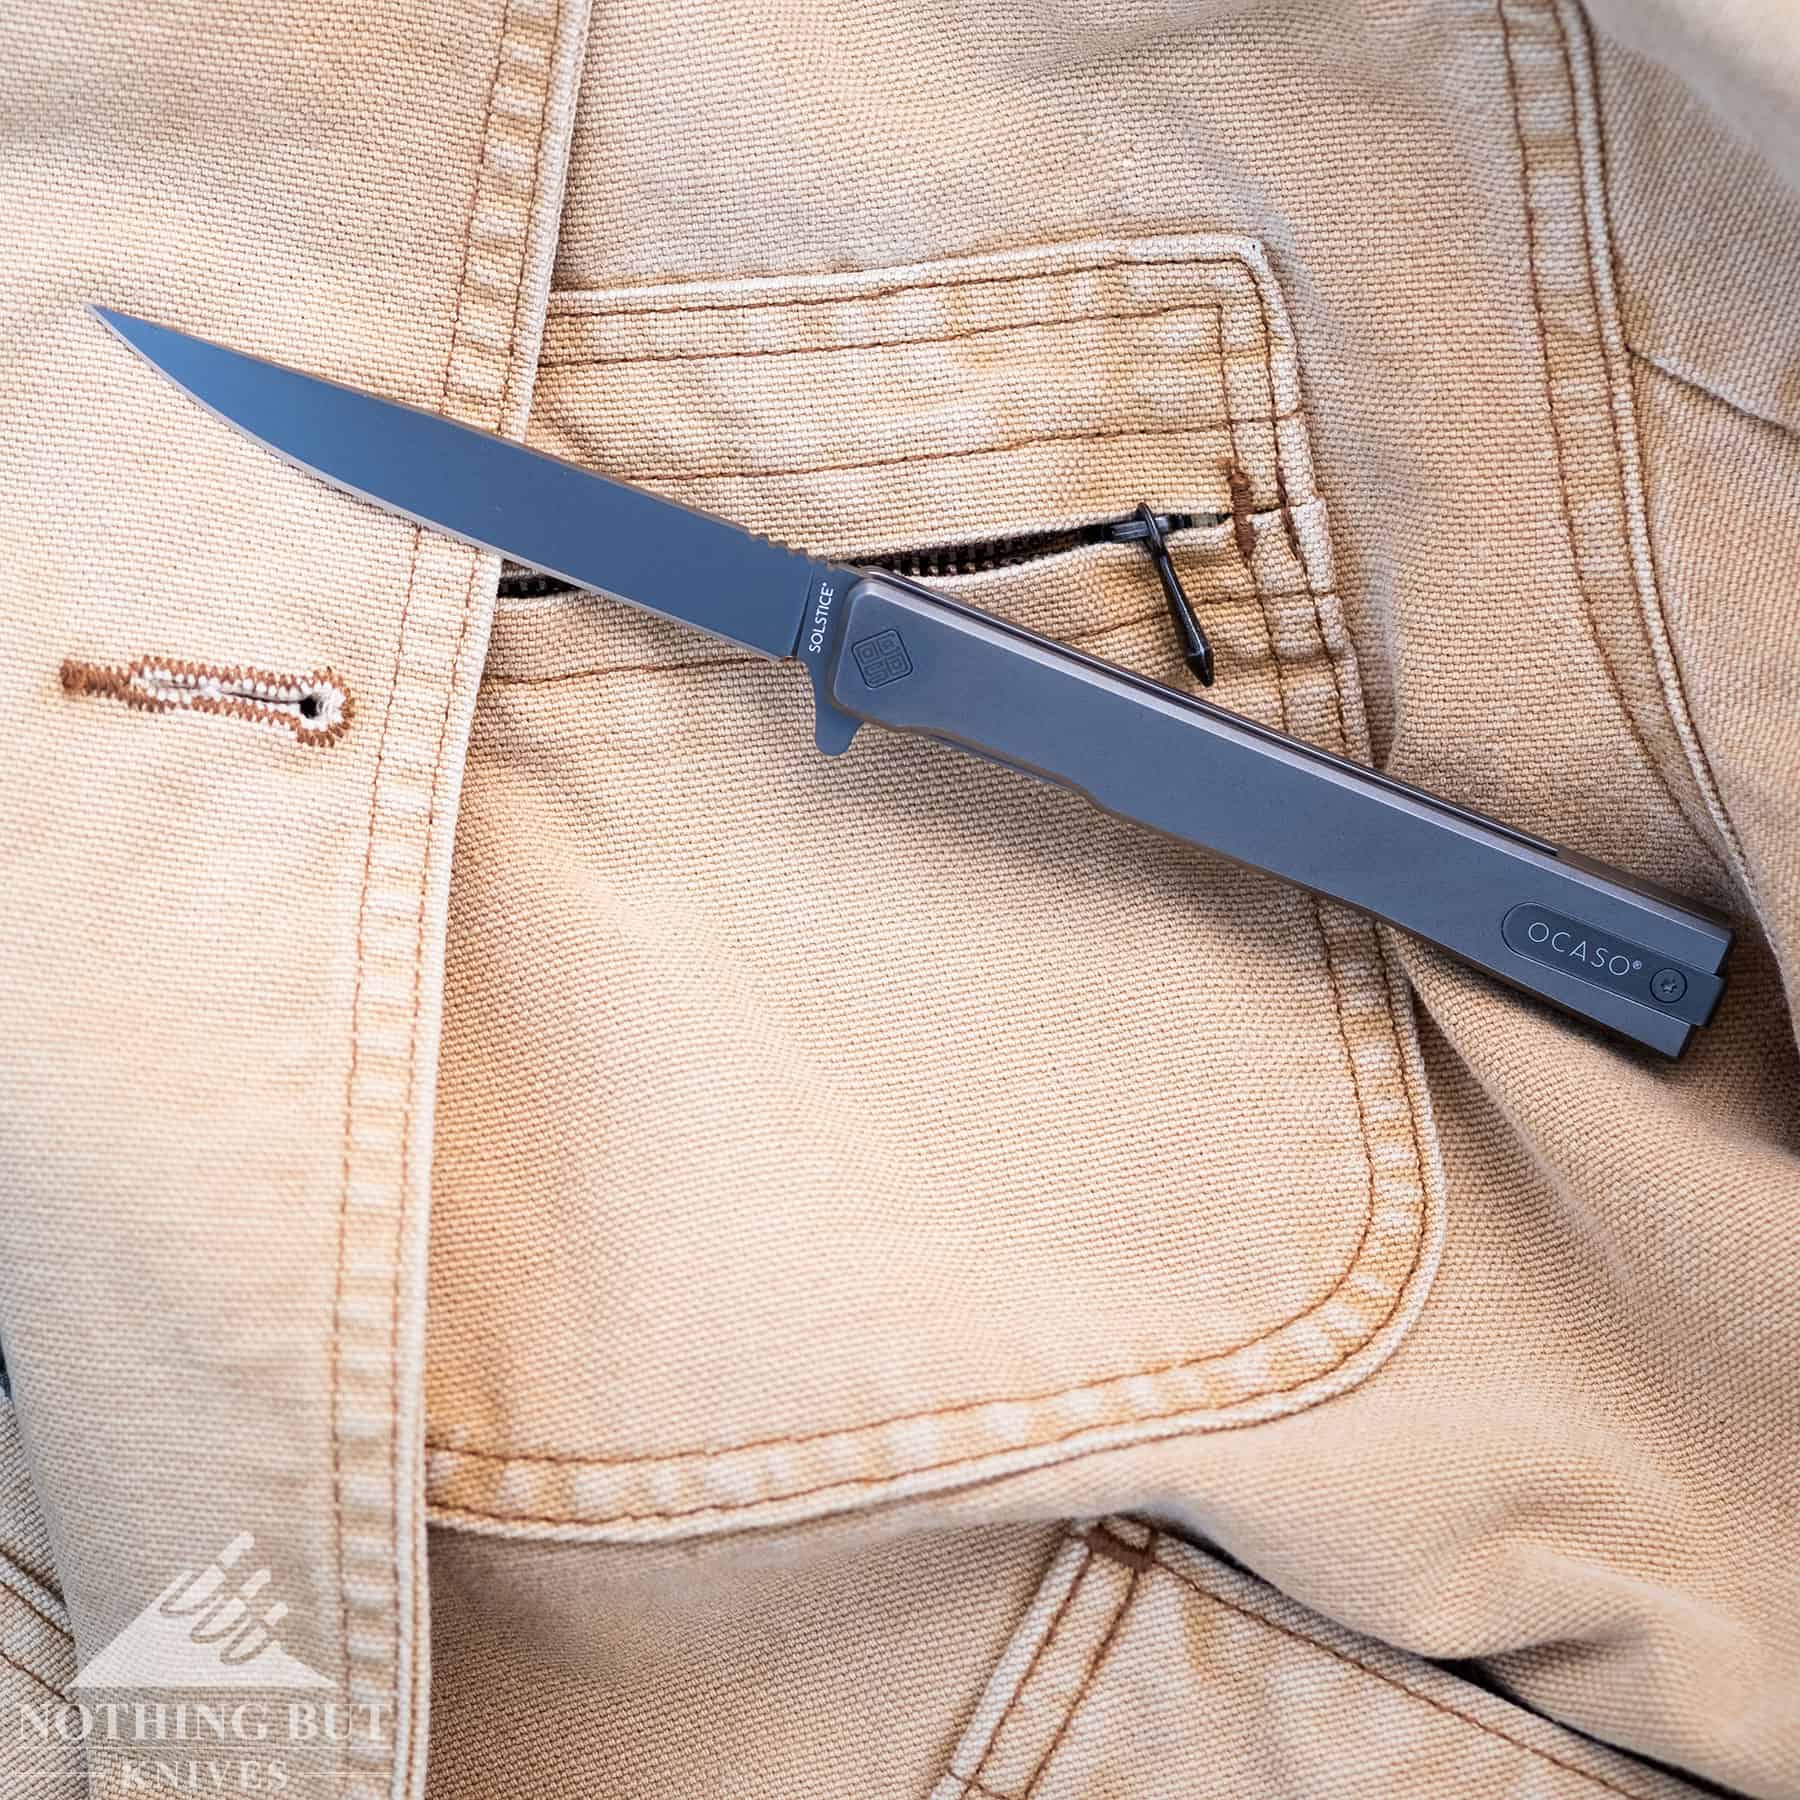 The Ocaso Solstice is more of a slacks pocket knife rather than a jeans pocket knife.